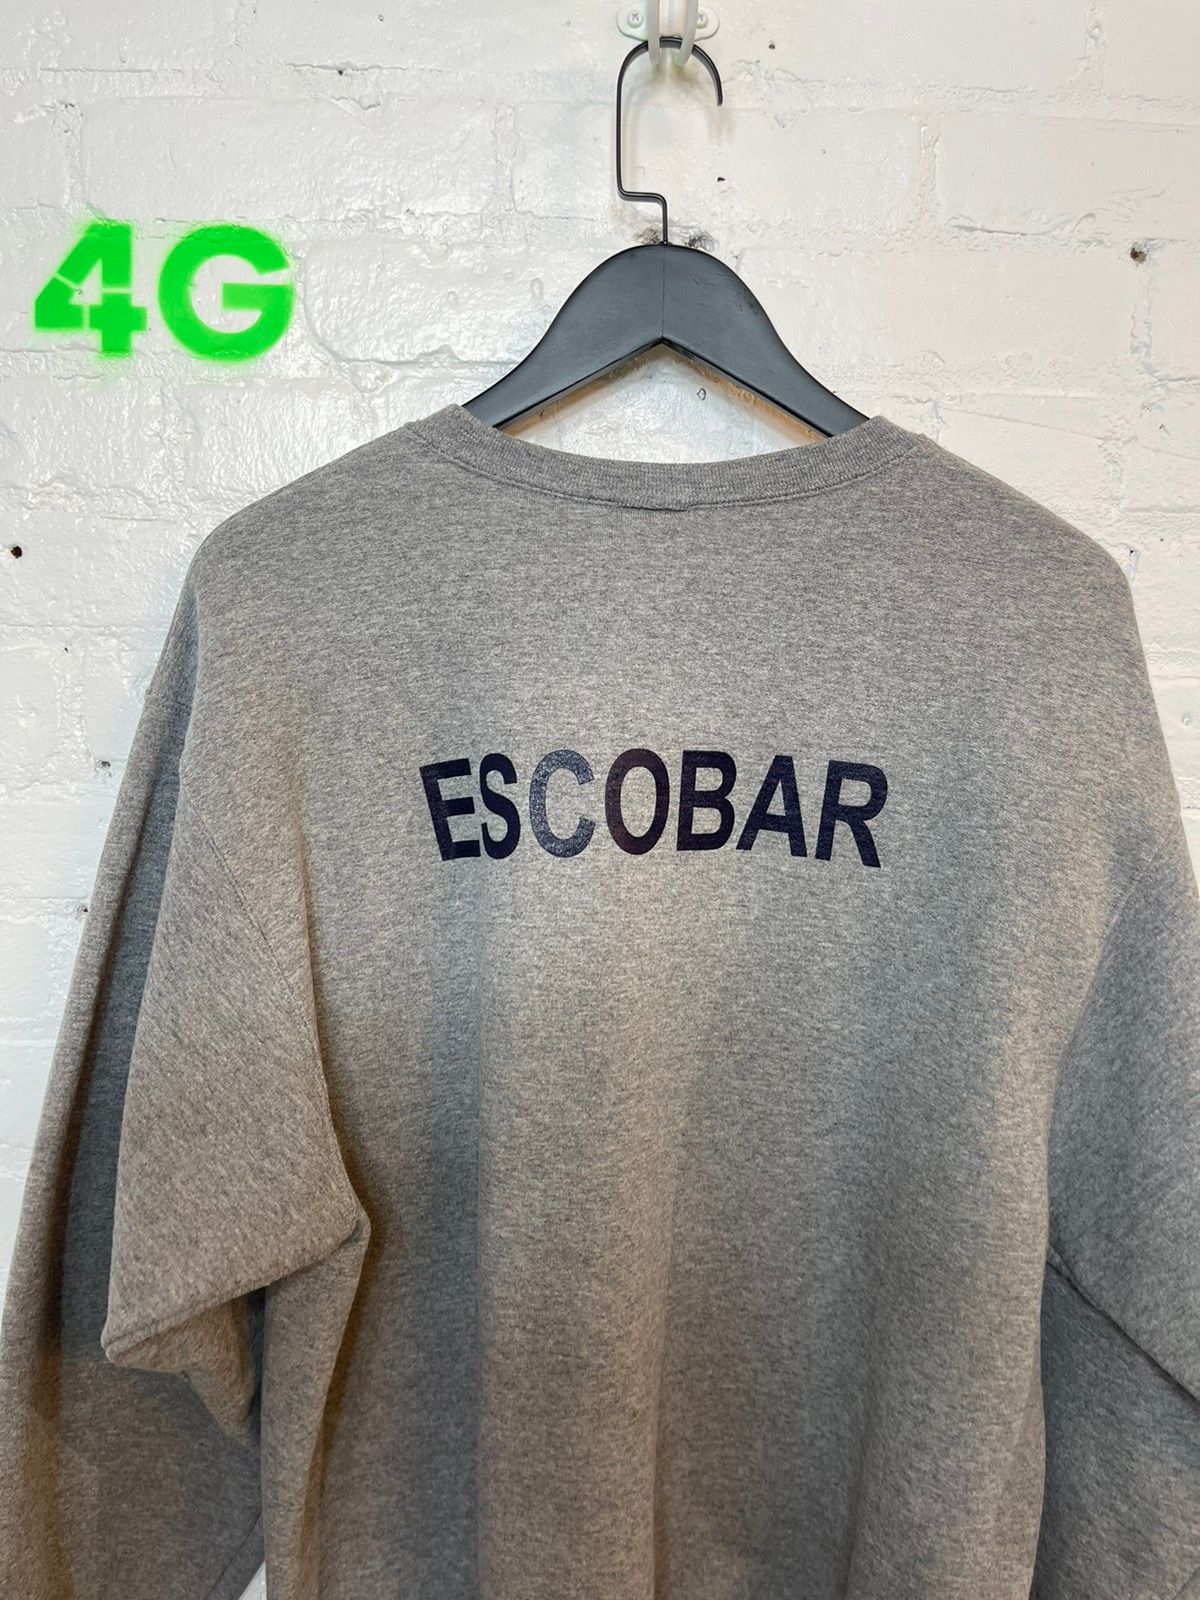 Vintage ESCOBAR Pablo Escobar Sweater Baggy Oversize